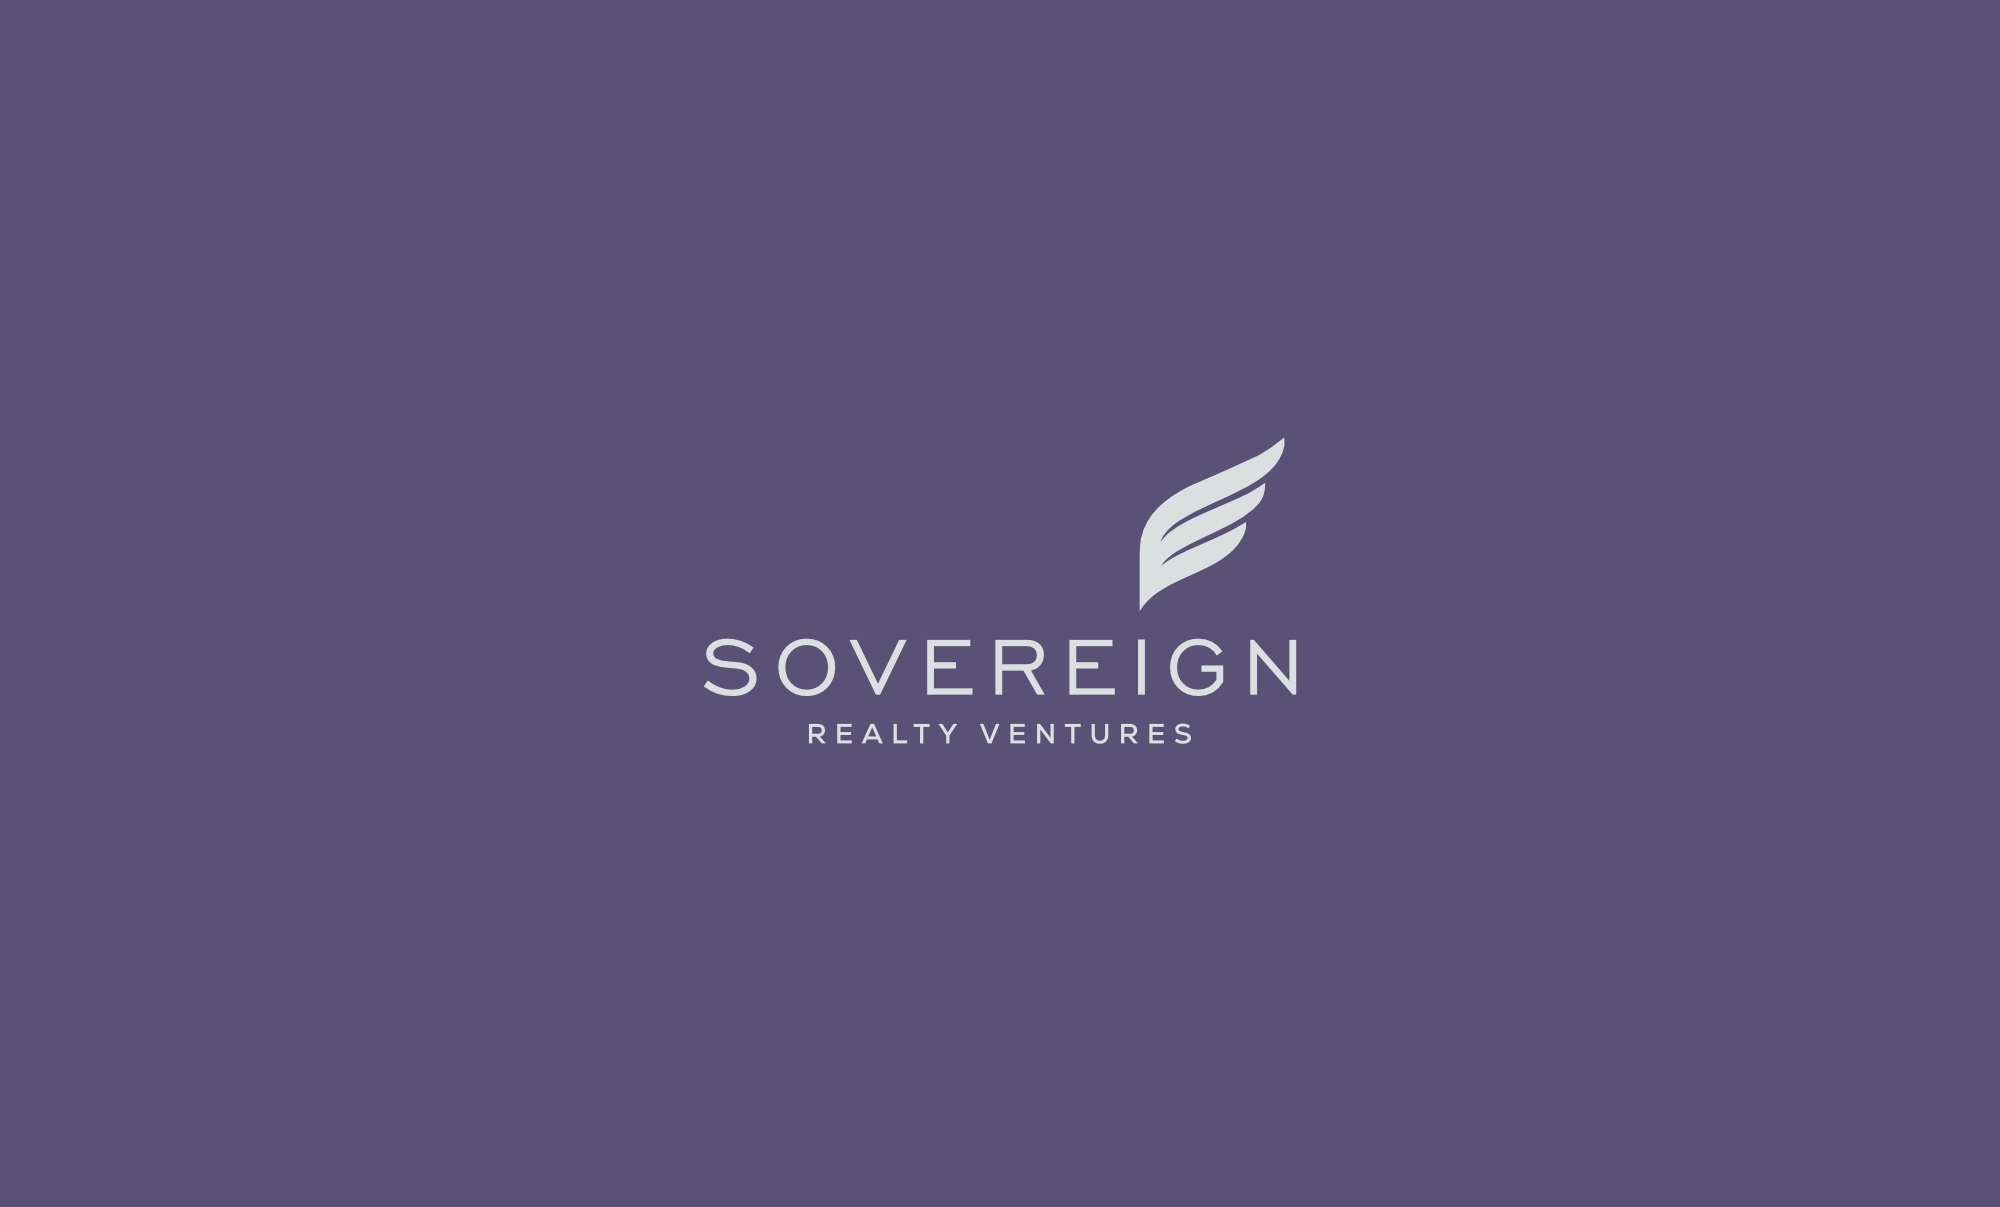 Sovereign-1-1